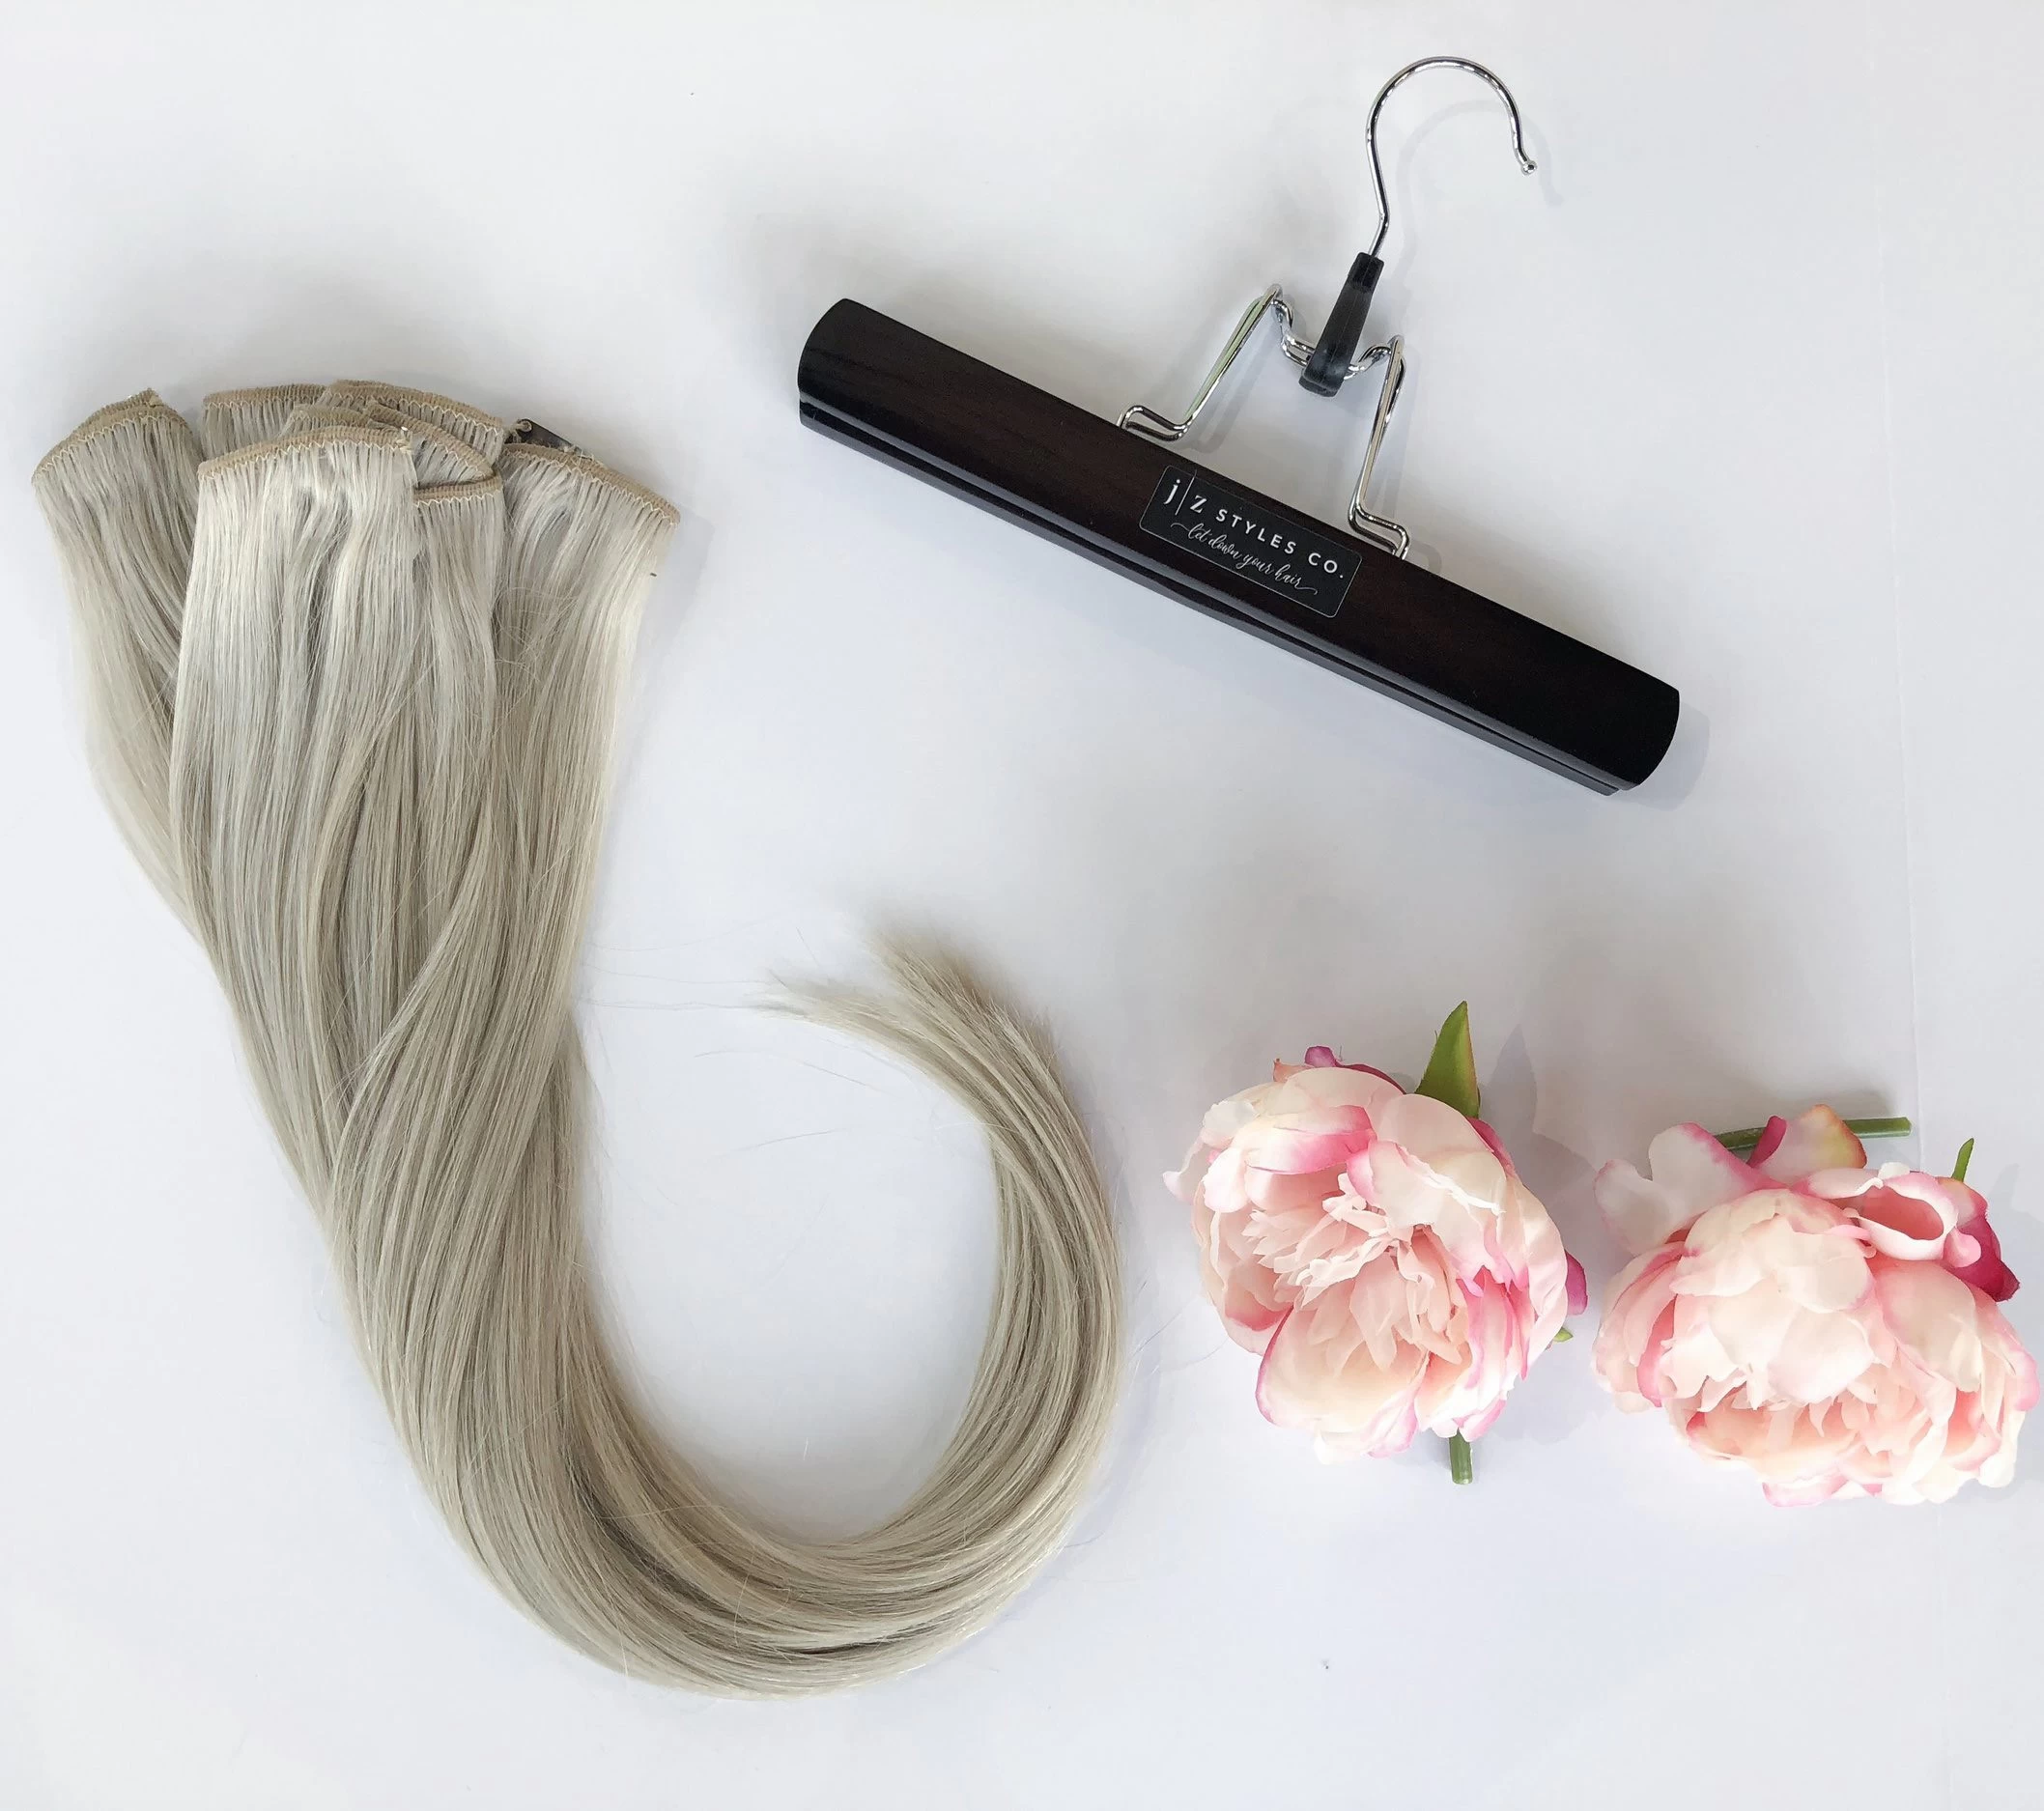 Вешалка для наращивания волос и сумка